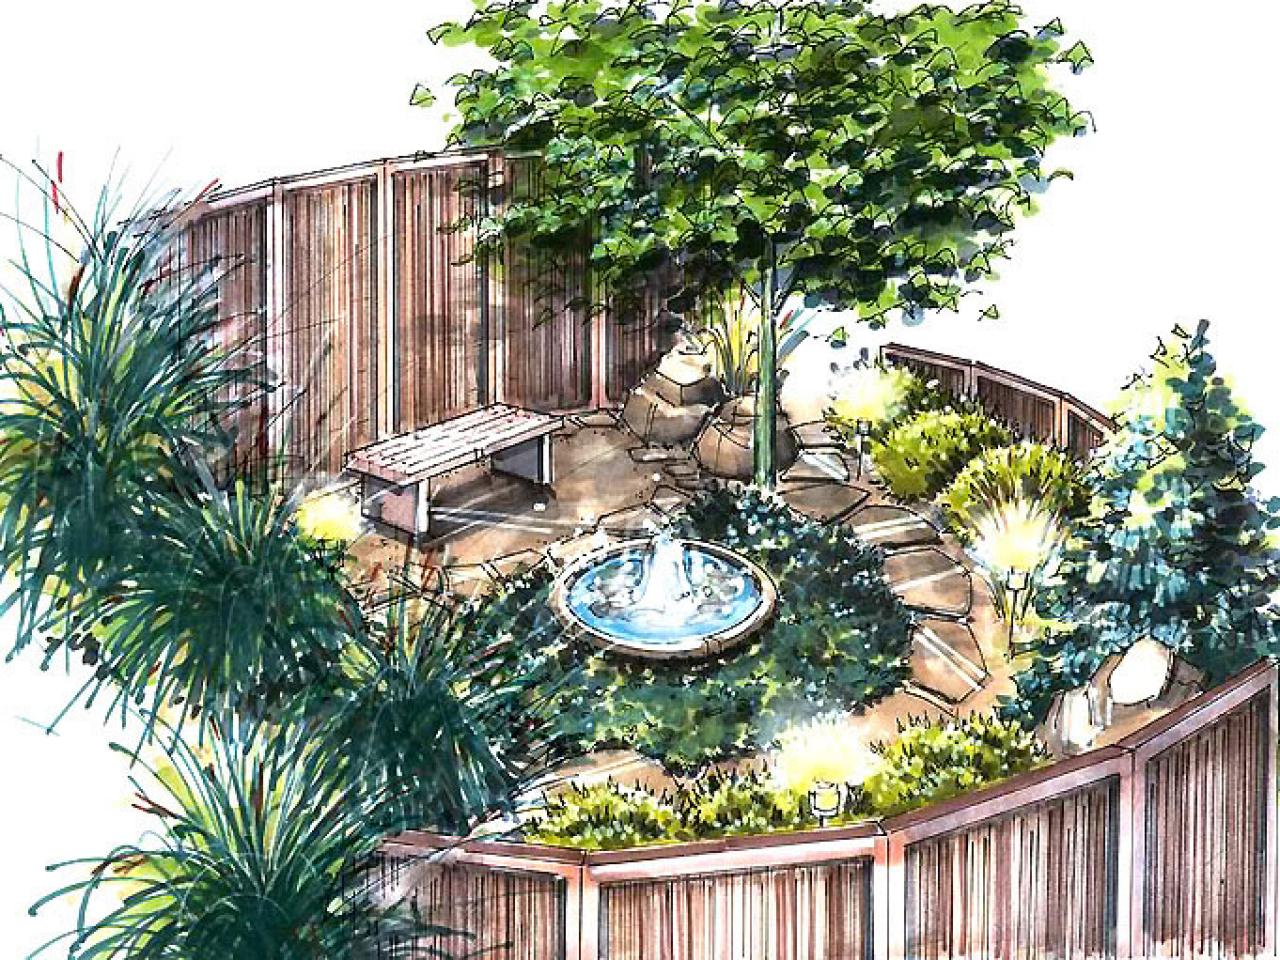 A Tation Garden Plan For Any Region, Prayer Garden Ideas For Home